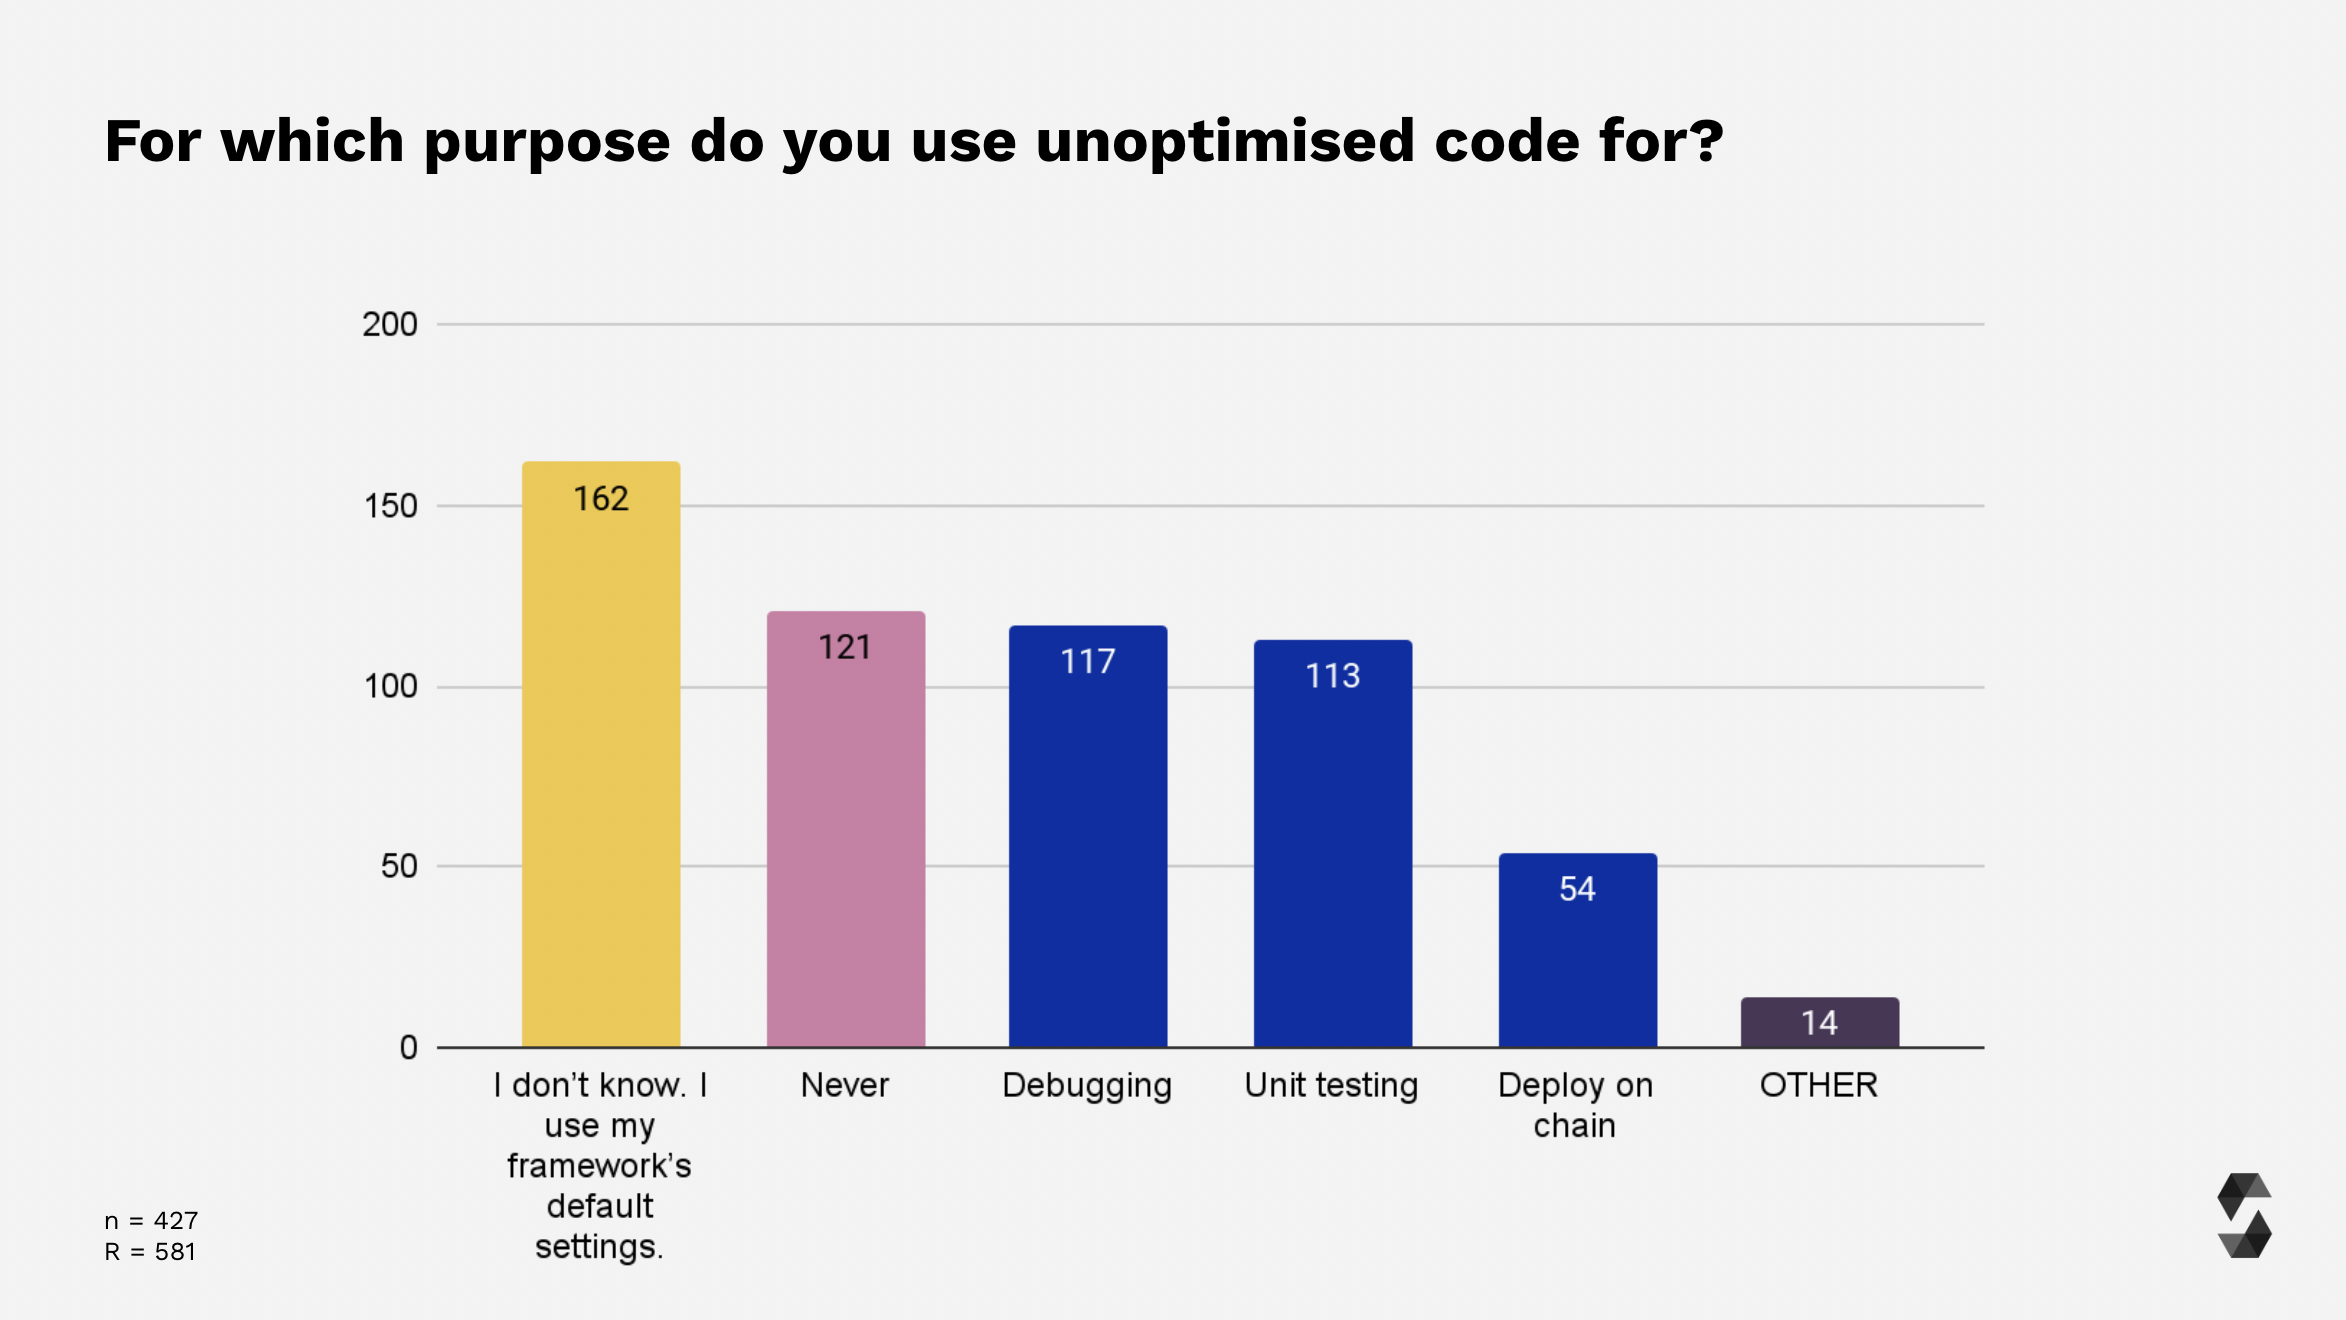 Usage of unoptimised code